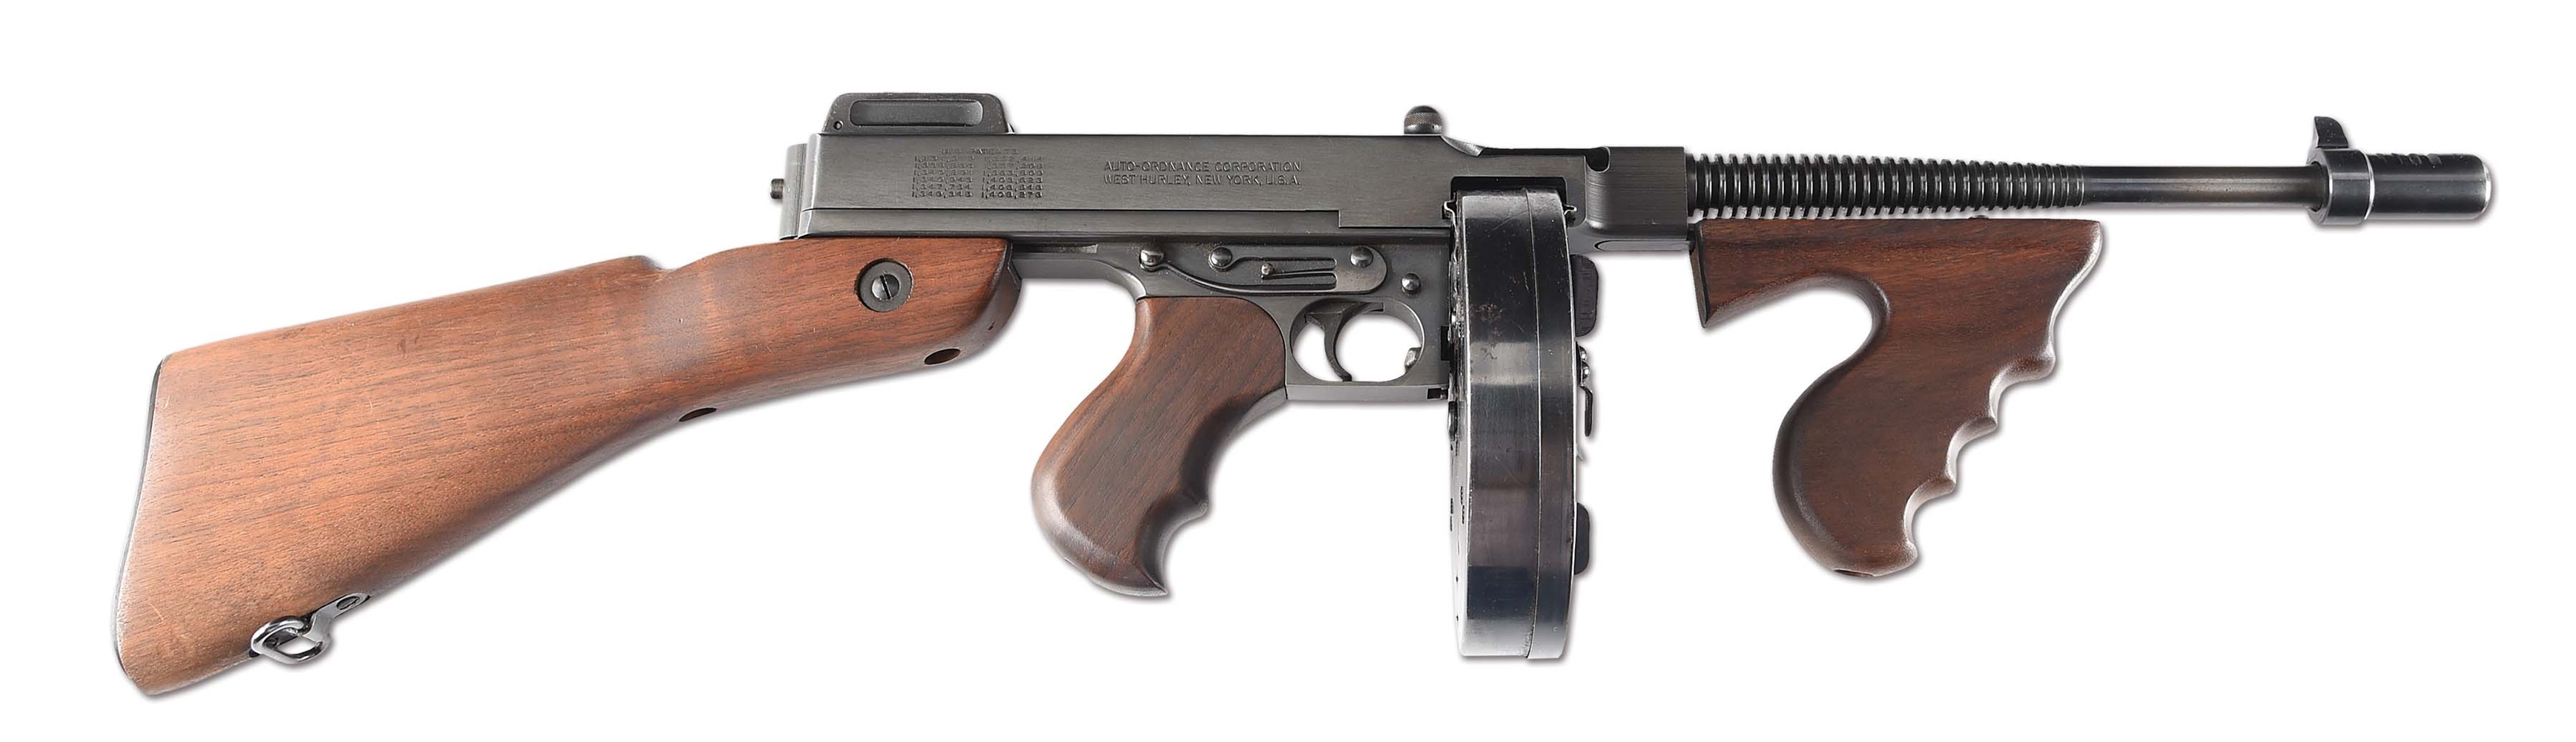 (N) ATTRACTIVE WEST HURLEY AUTO ORDNANCE THOMPSON MODEL 1928 SUBMACHINE GUN (CURIO & RELIC).